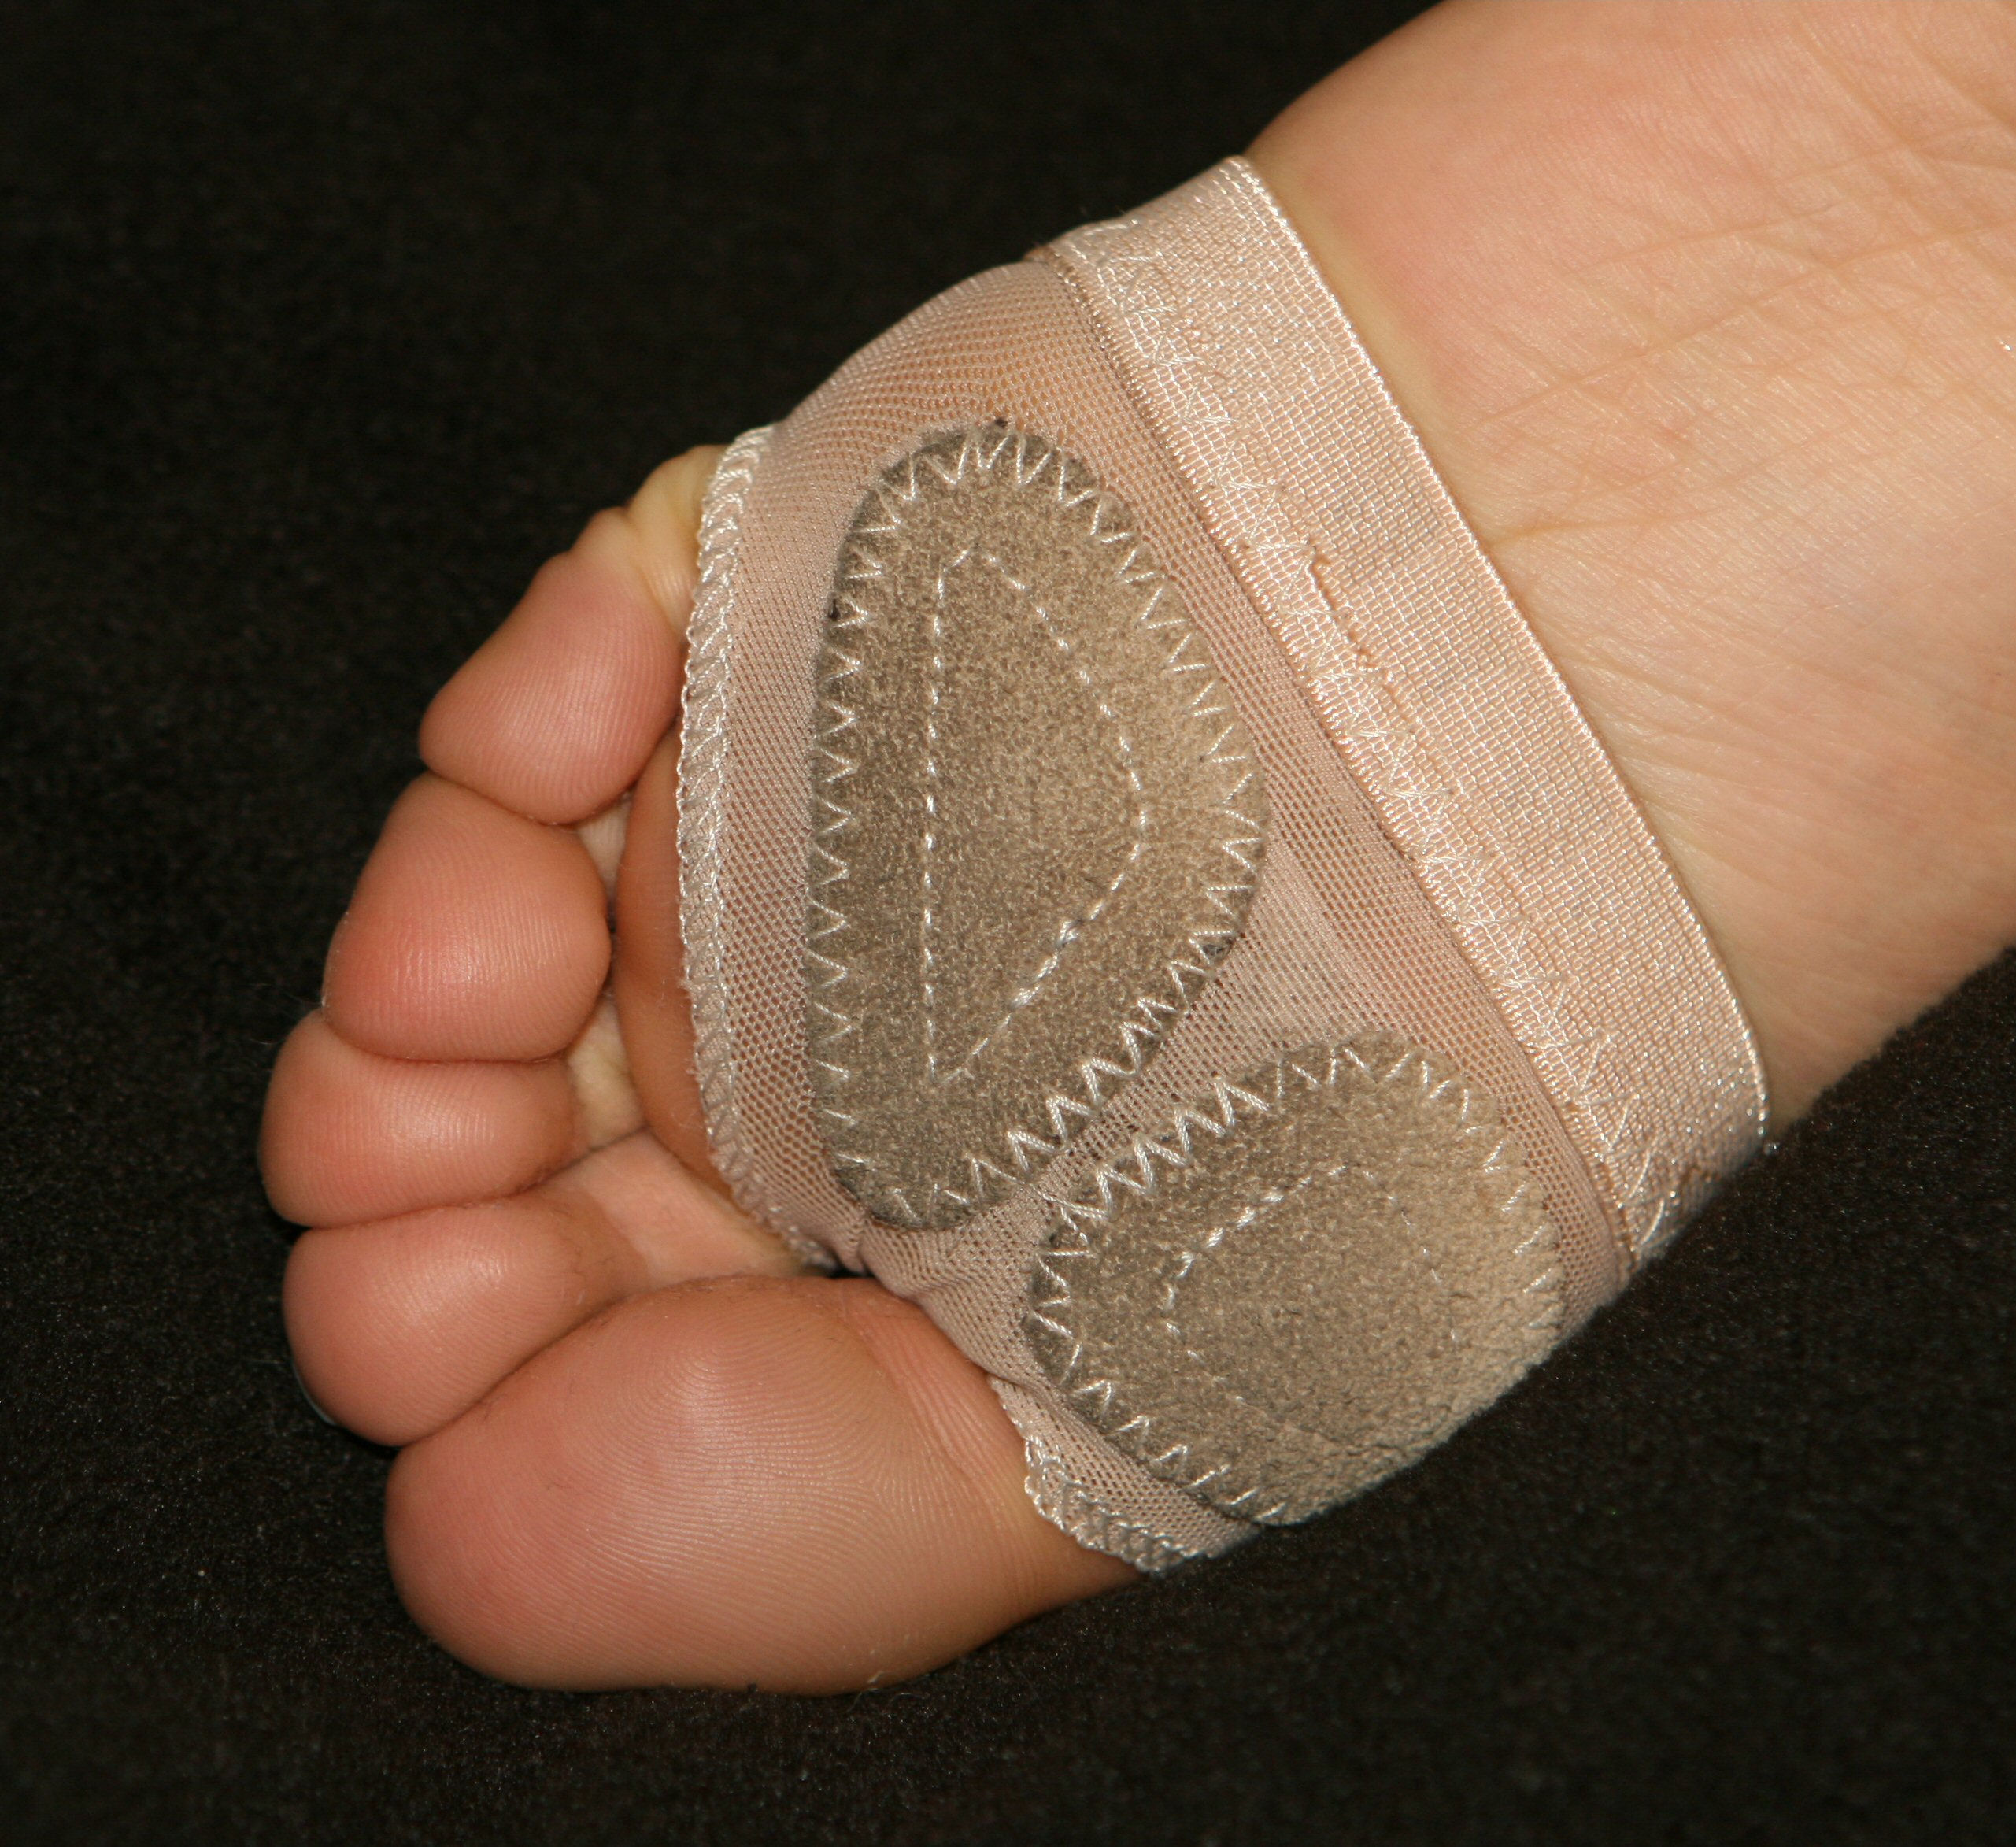 File:Pointe shoe toe spacers.jpg - Wikipedia